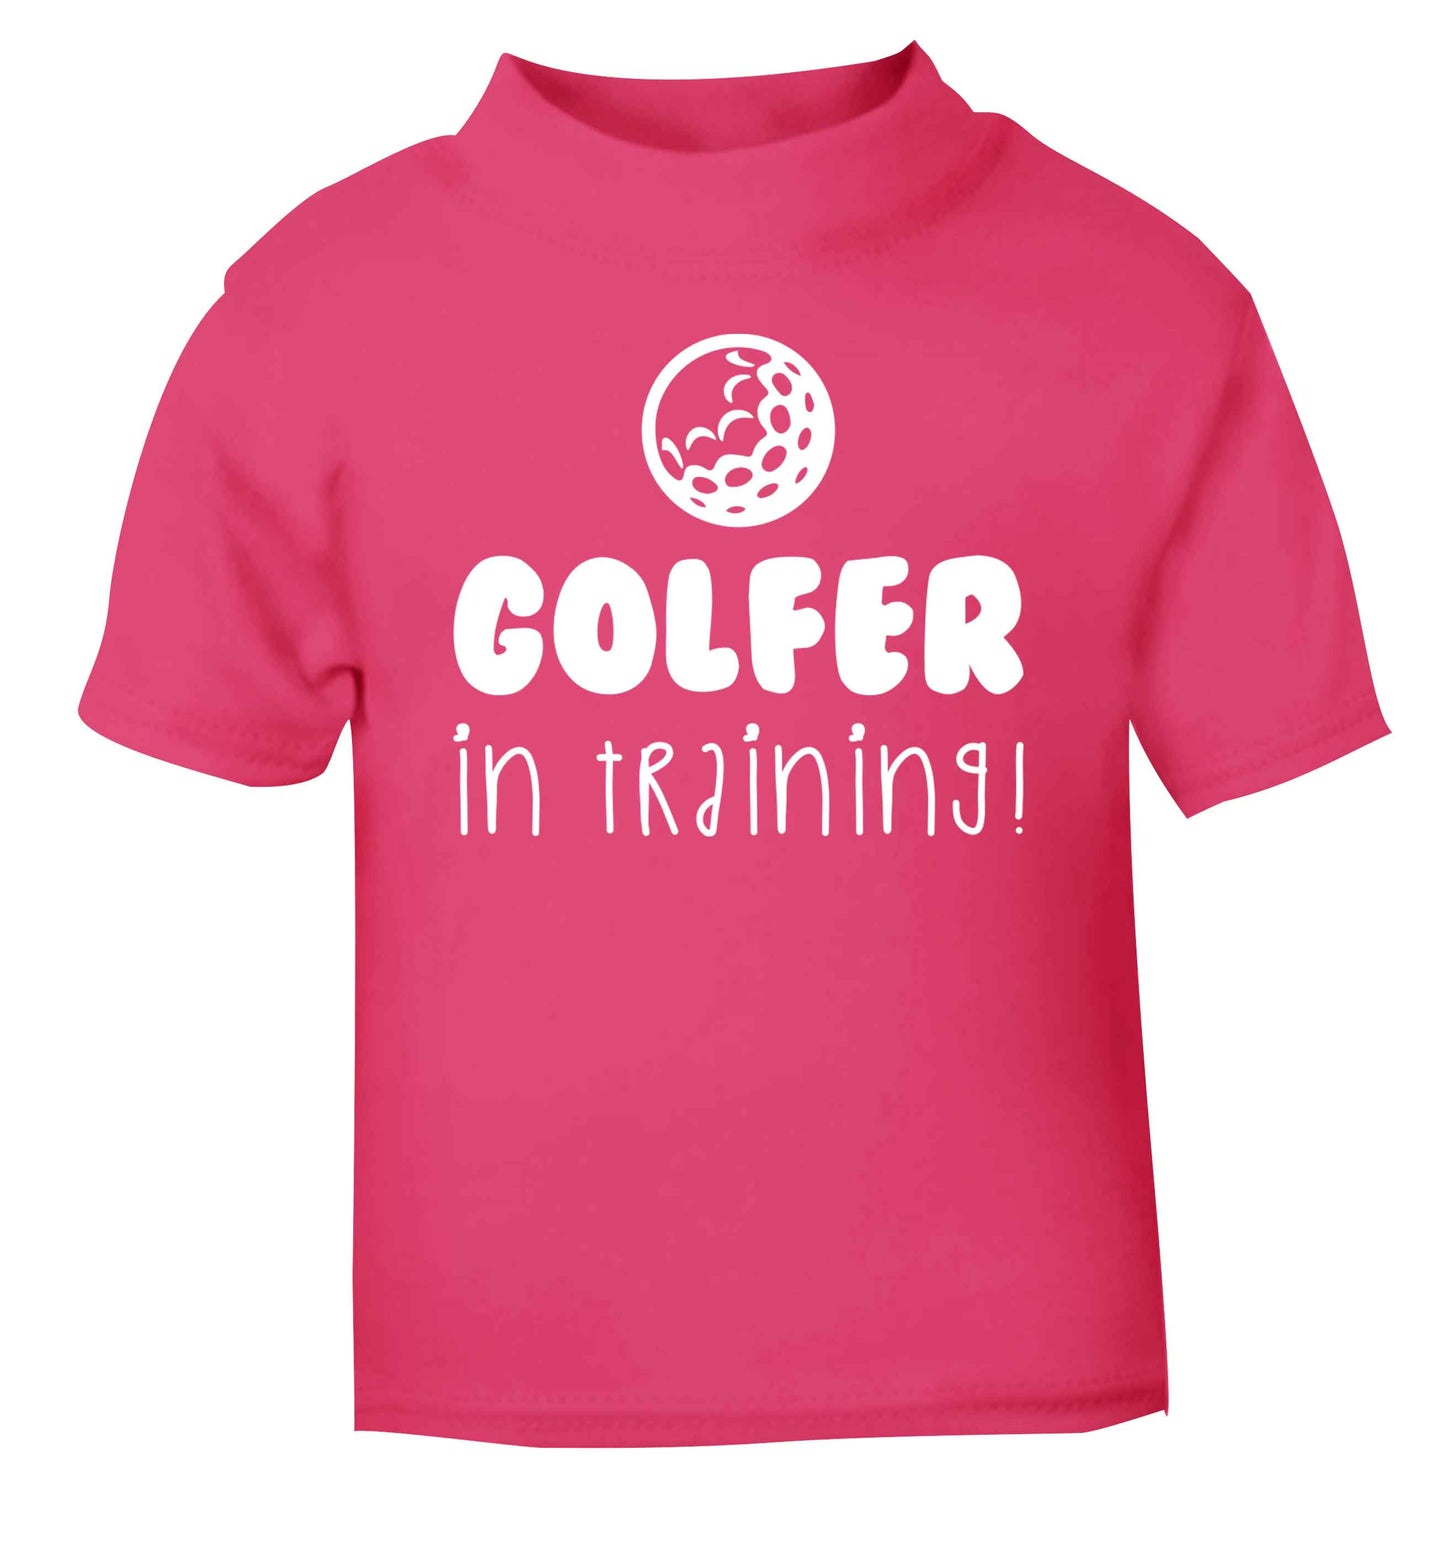 Golfer in training pink Baby Toddler Tshirt 2 Years